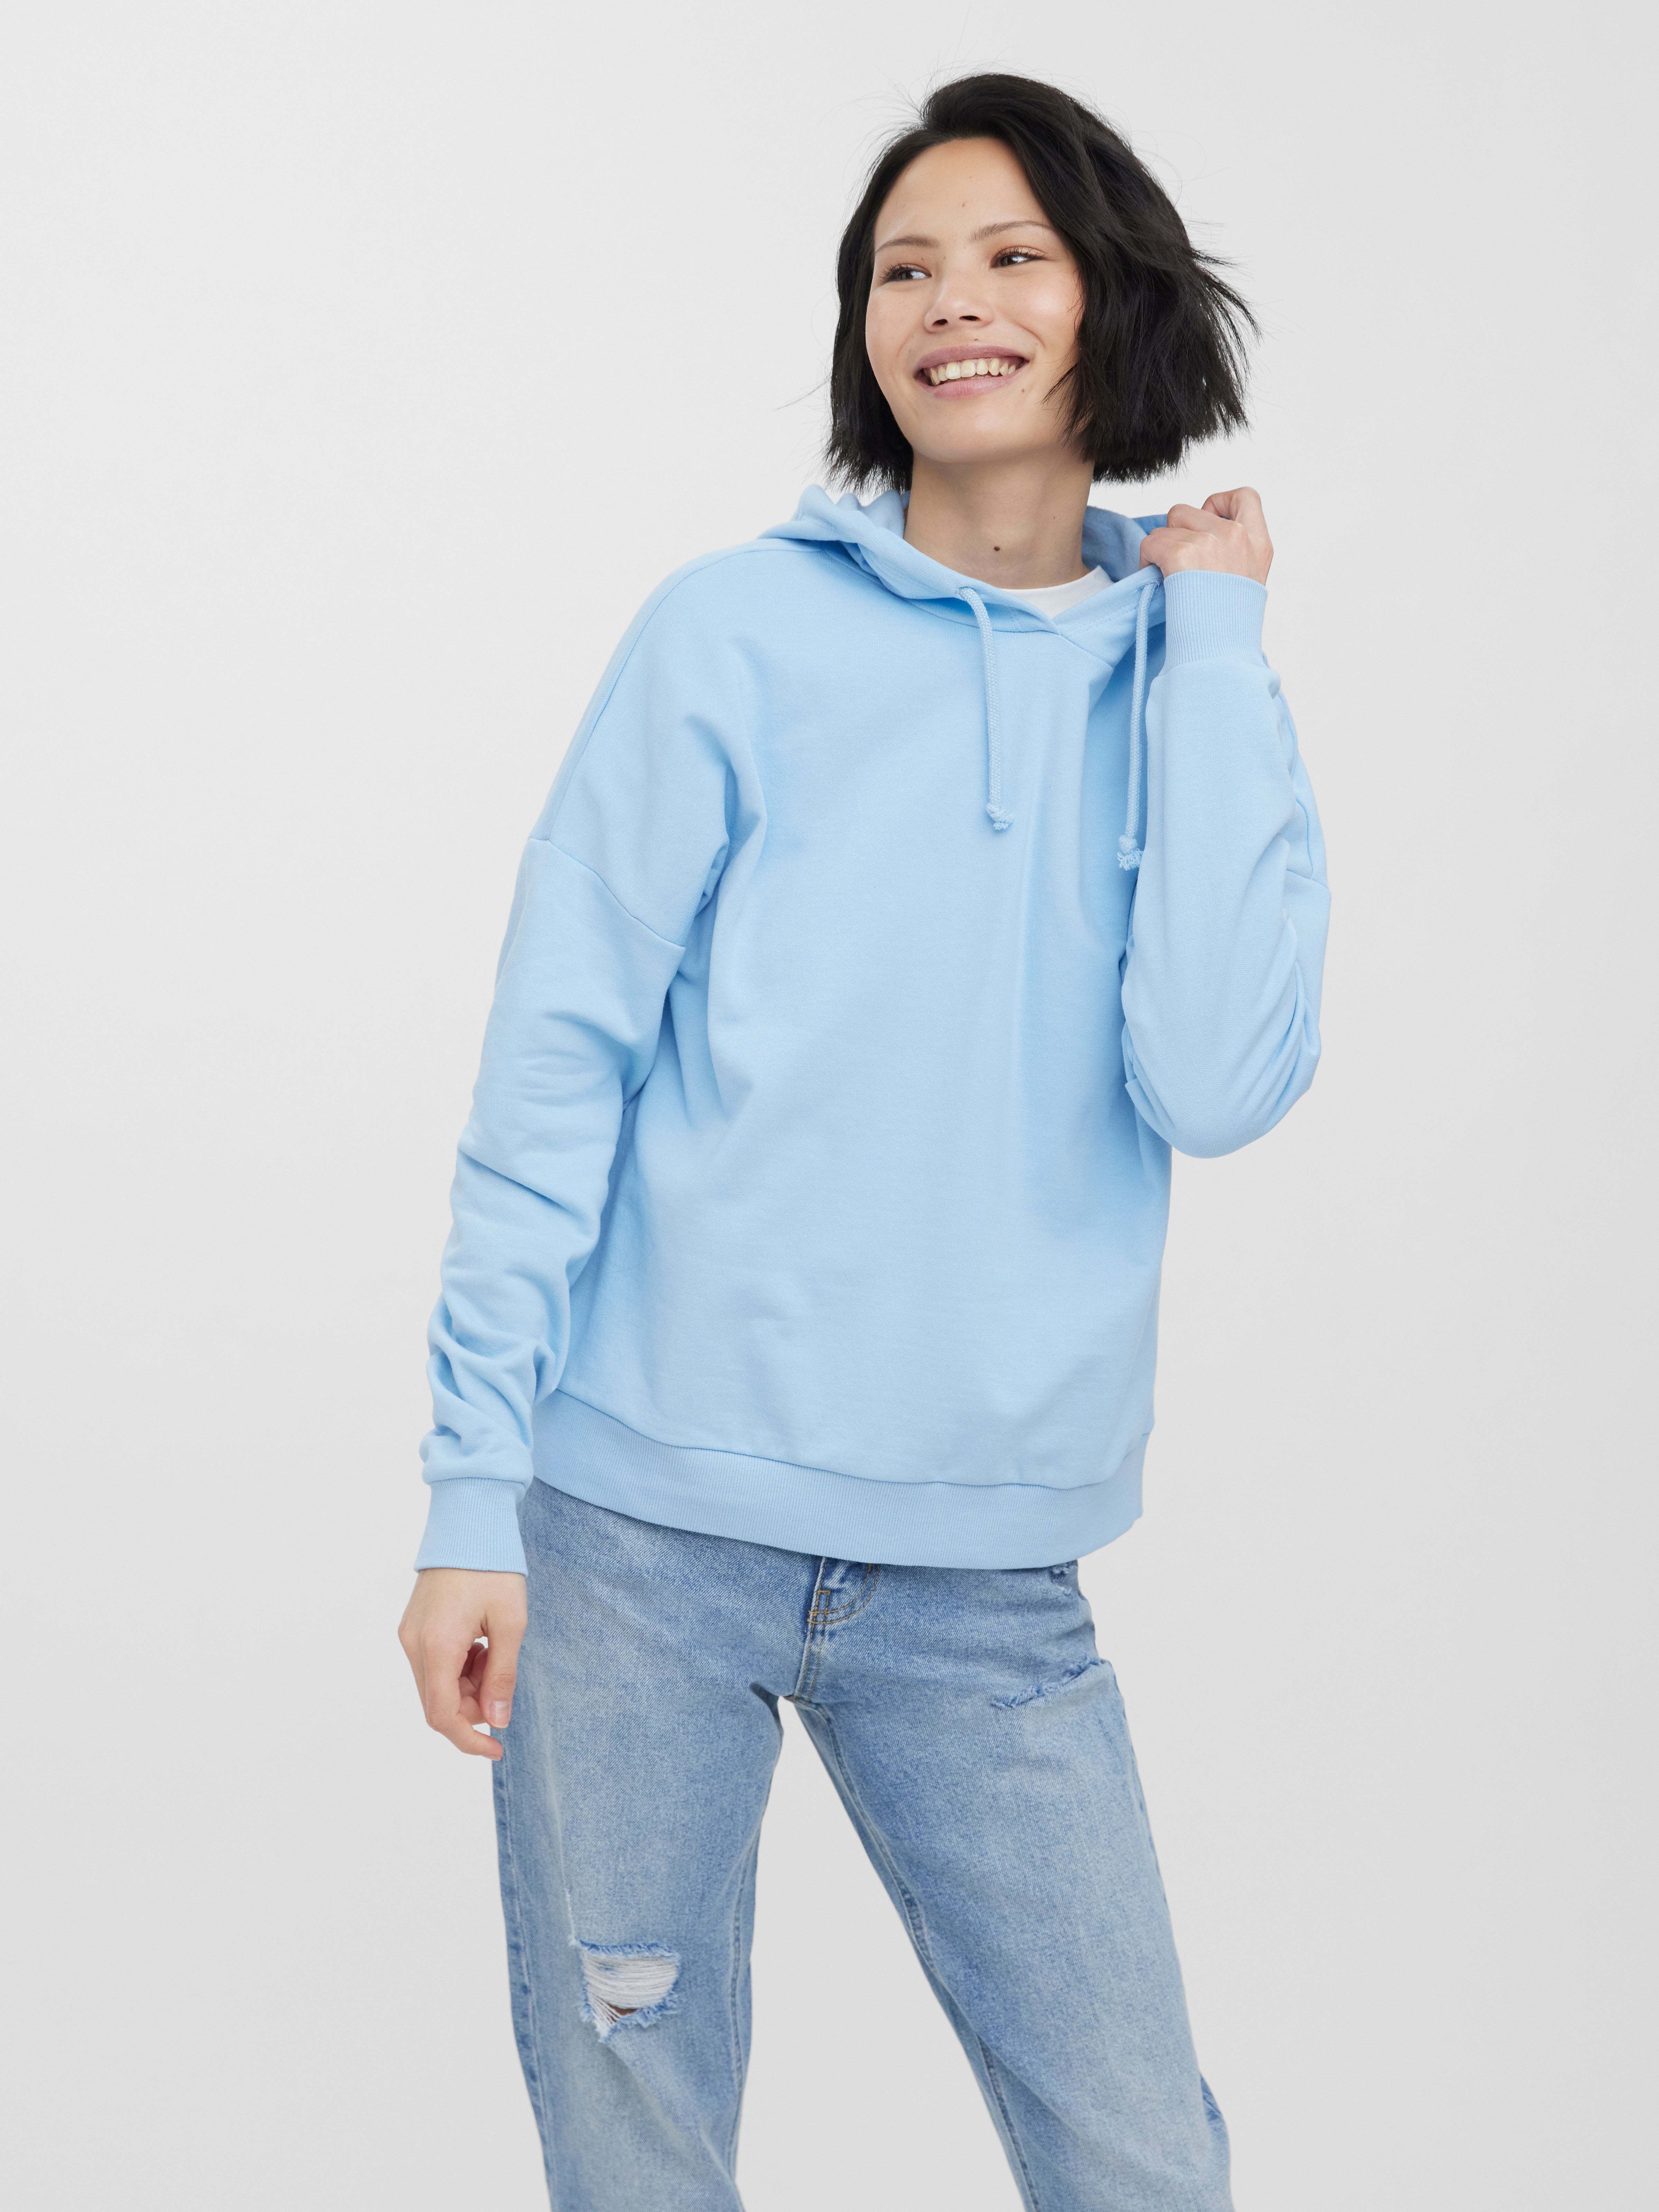 Rabatt 73 % Vero Moda sweatshirt Dunkelblau M DAMEN Pullovers & Sweatshirts Basisch 